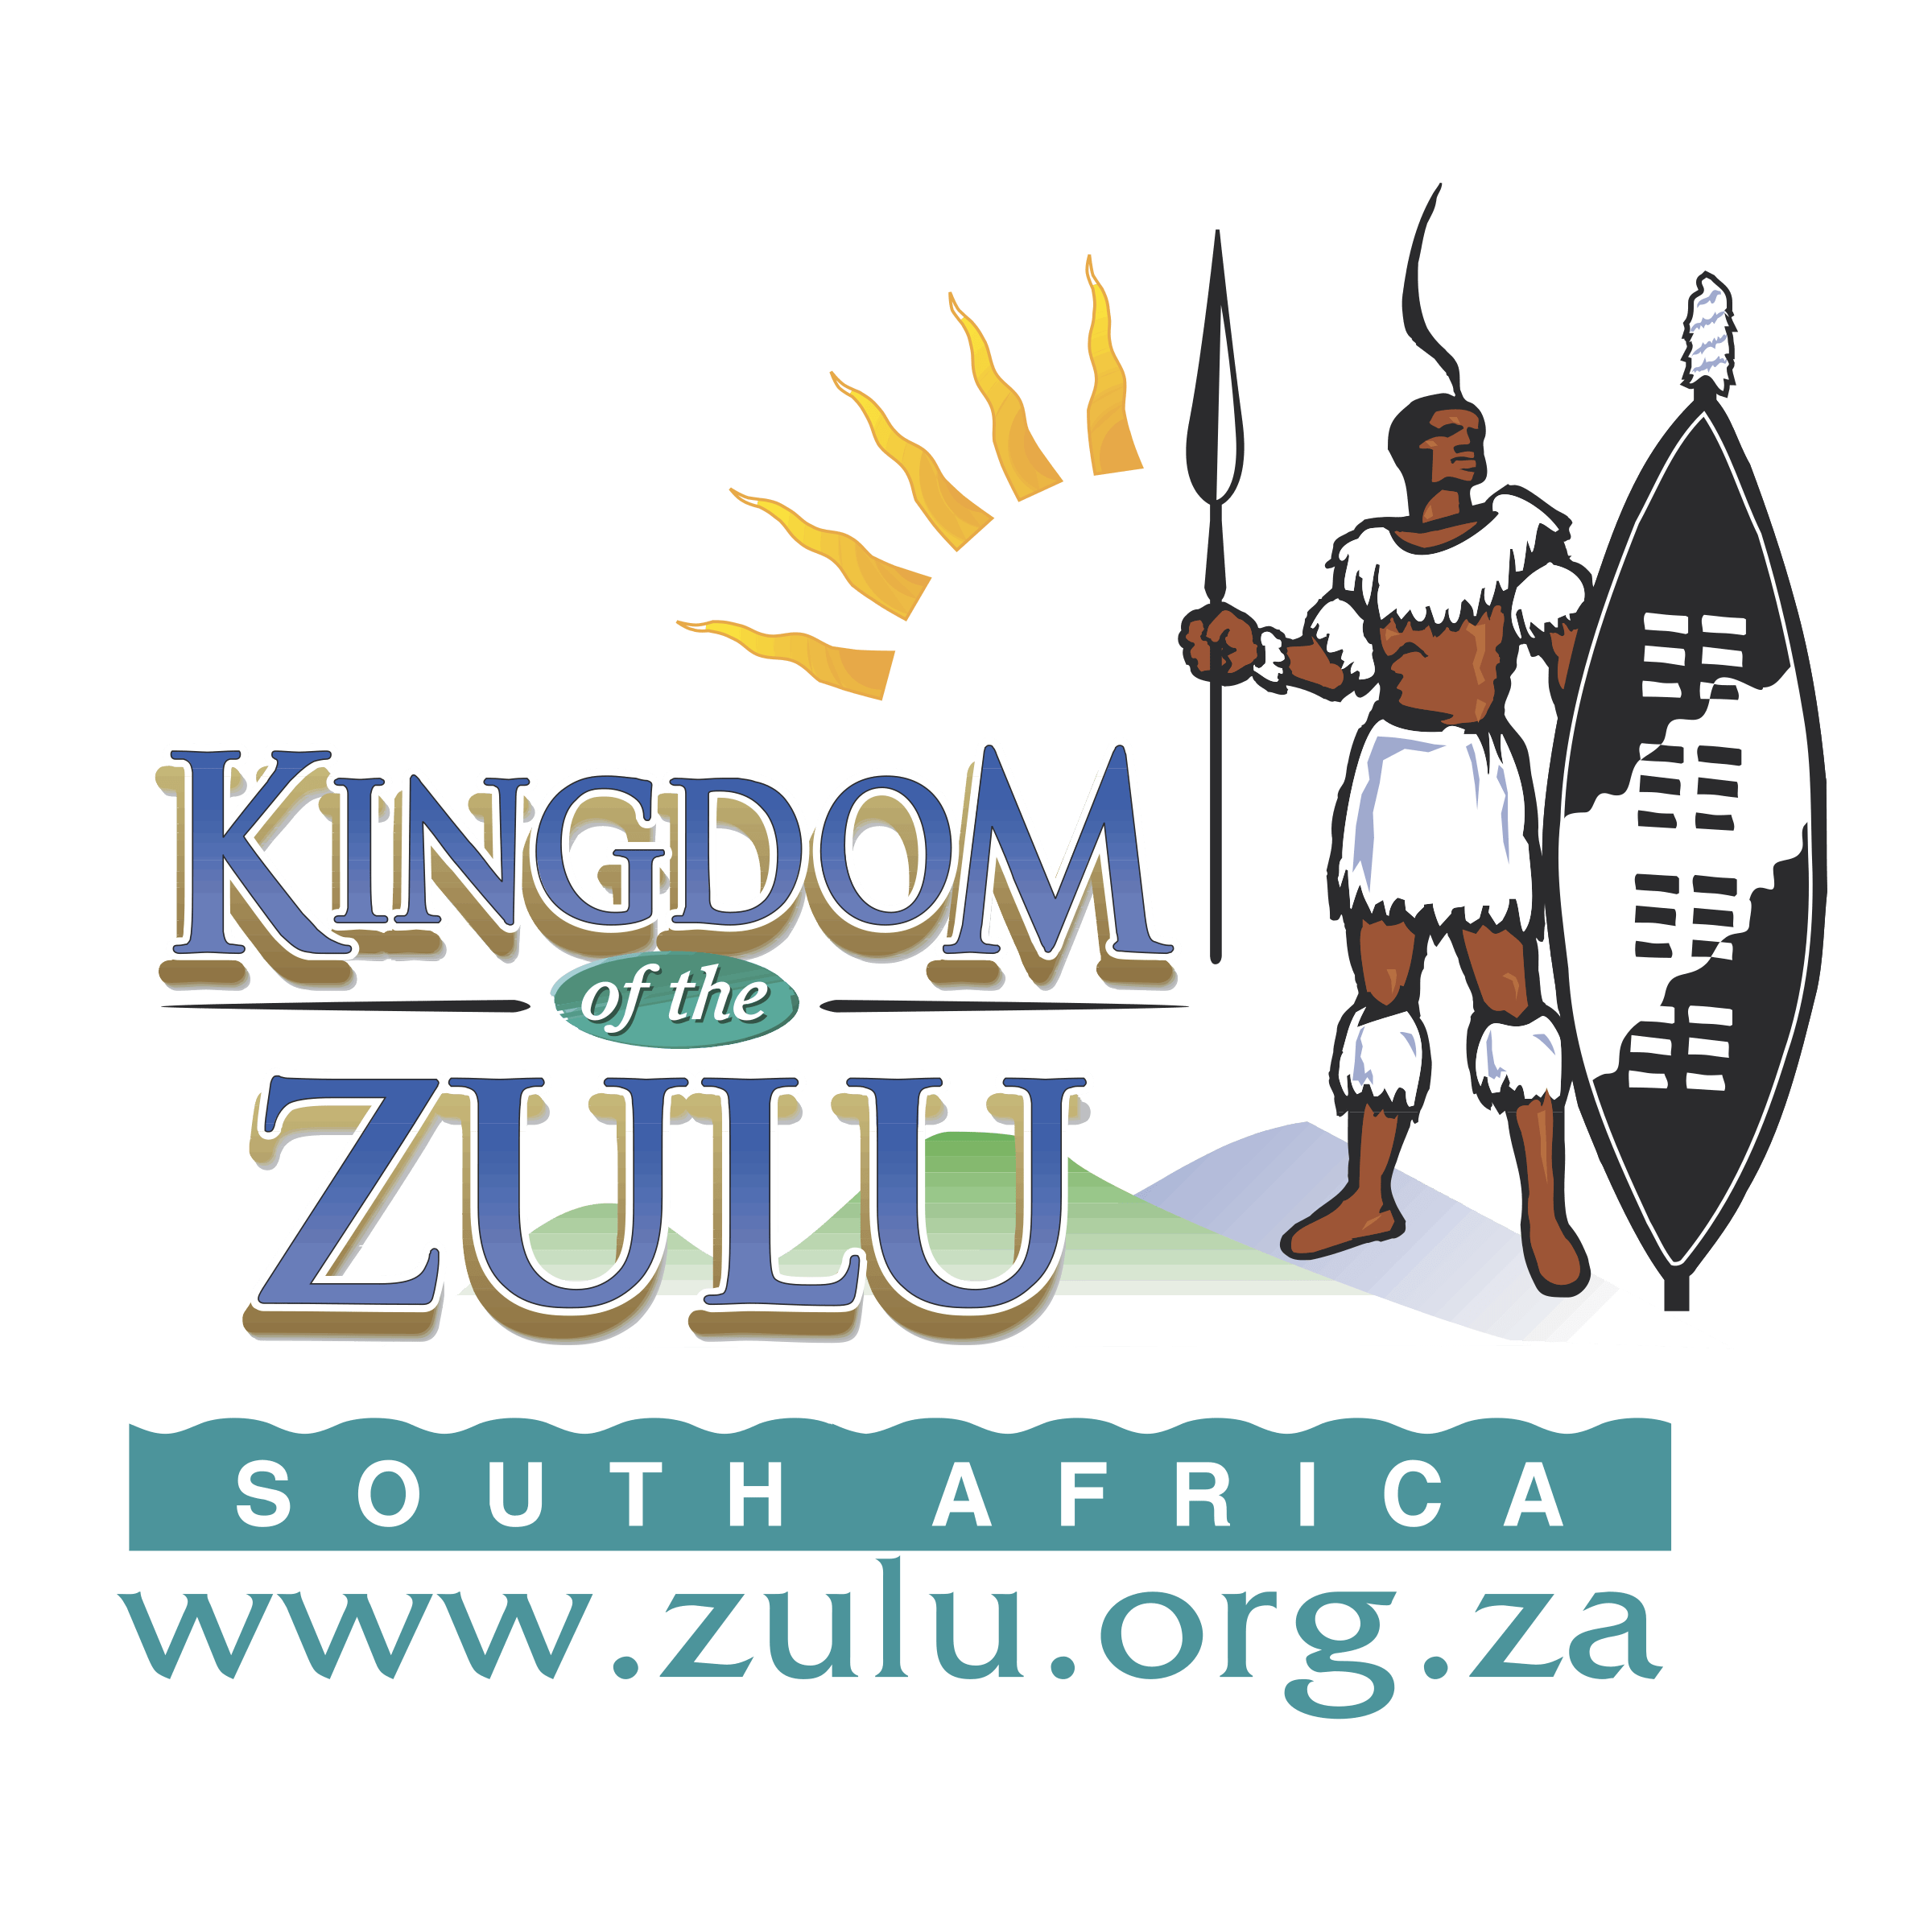 Zulu Logo - Kingdom of the Zulu Logo PNG Transparent & SVG Vector - Freebie Supply